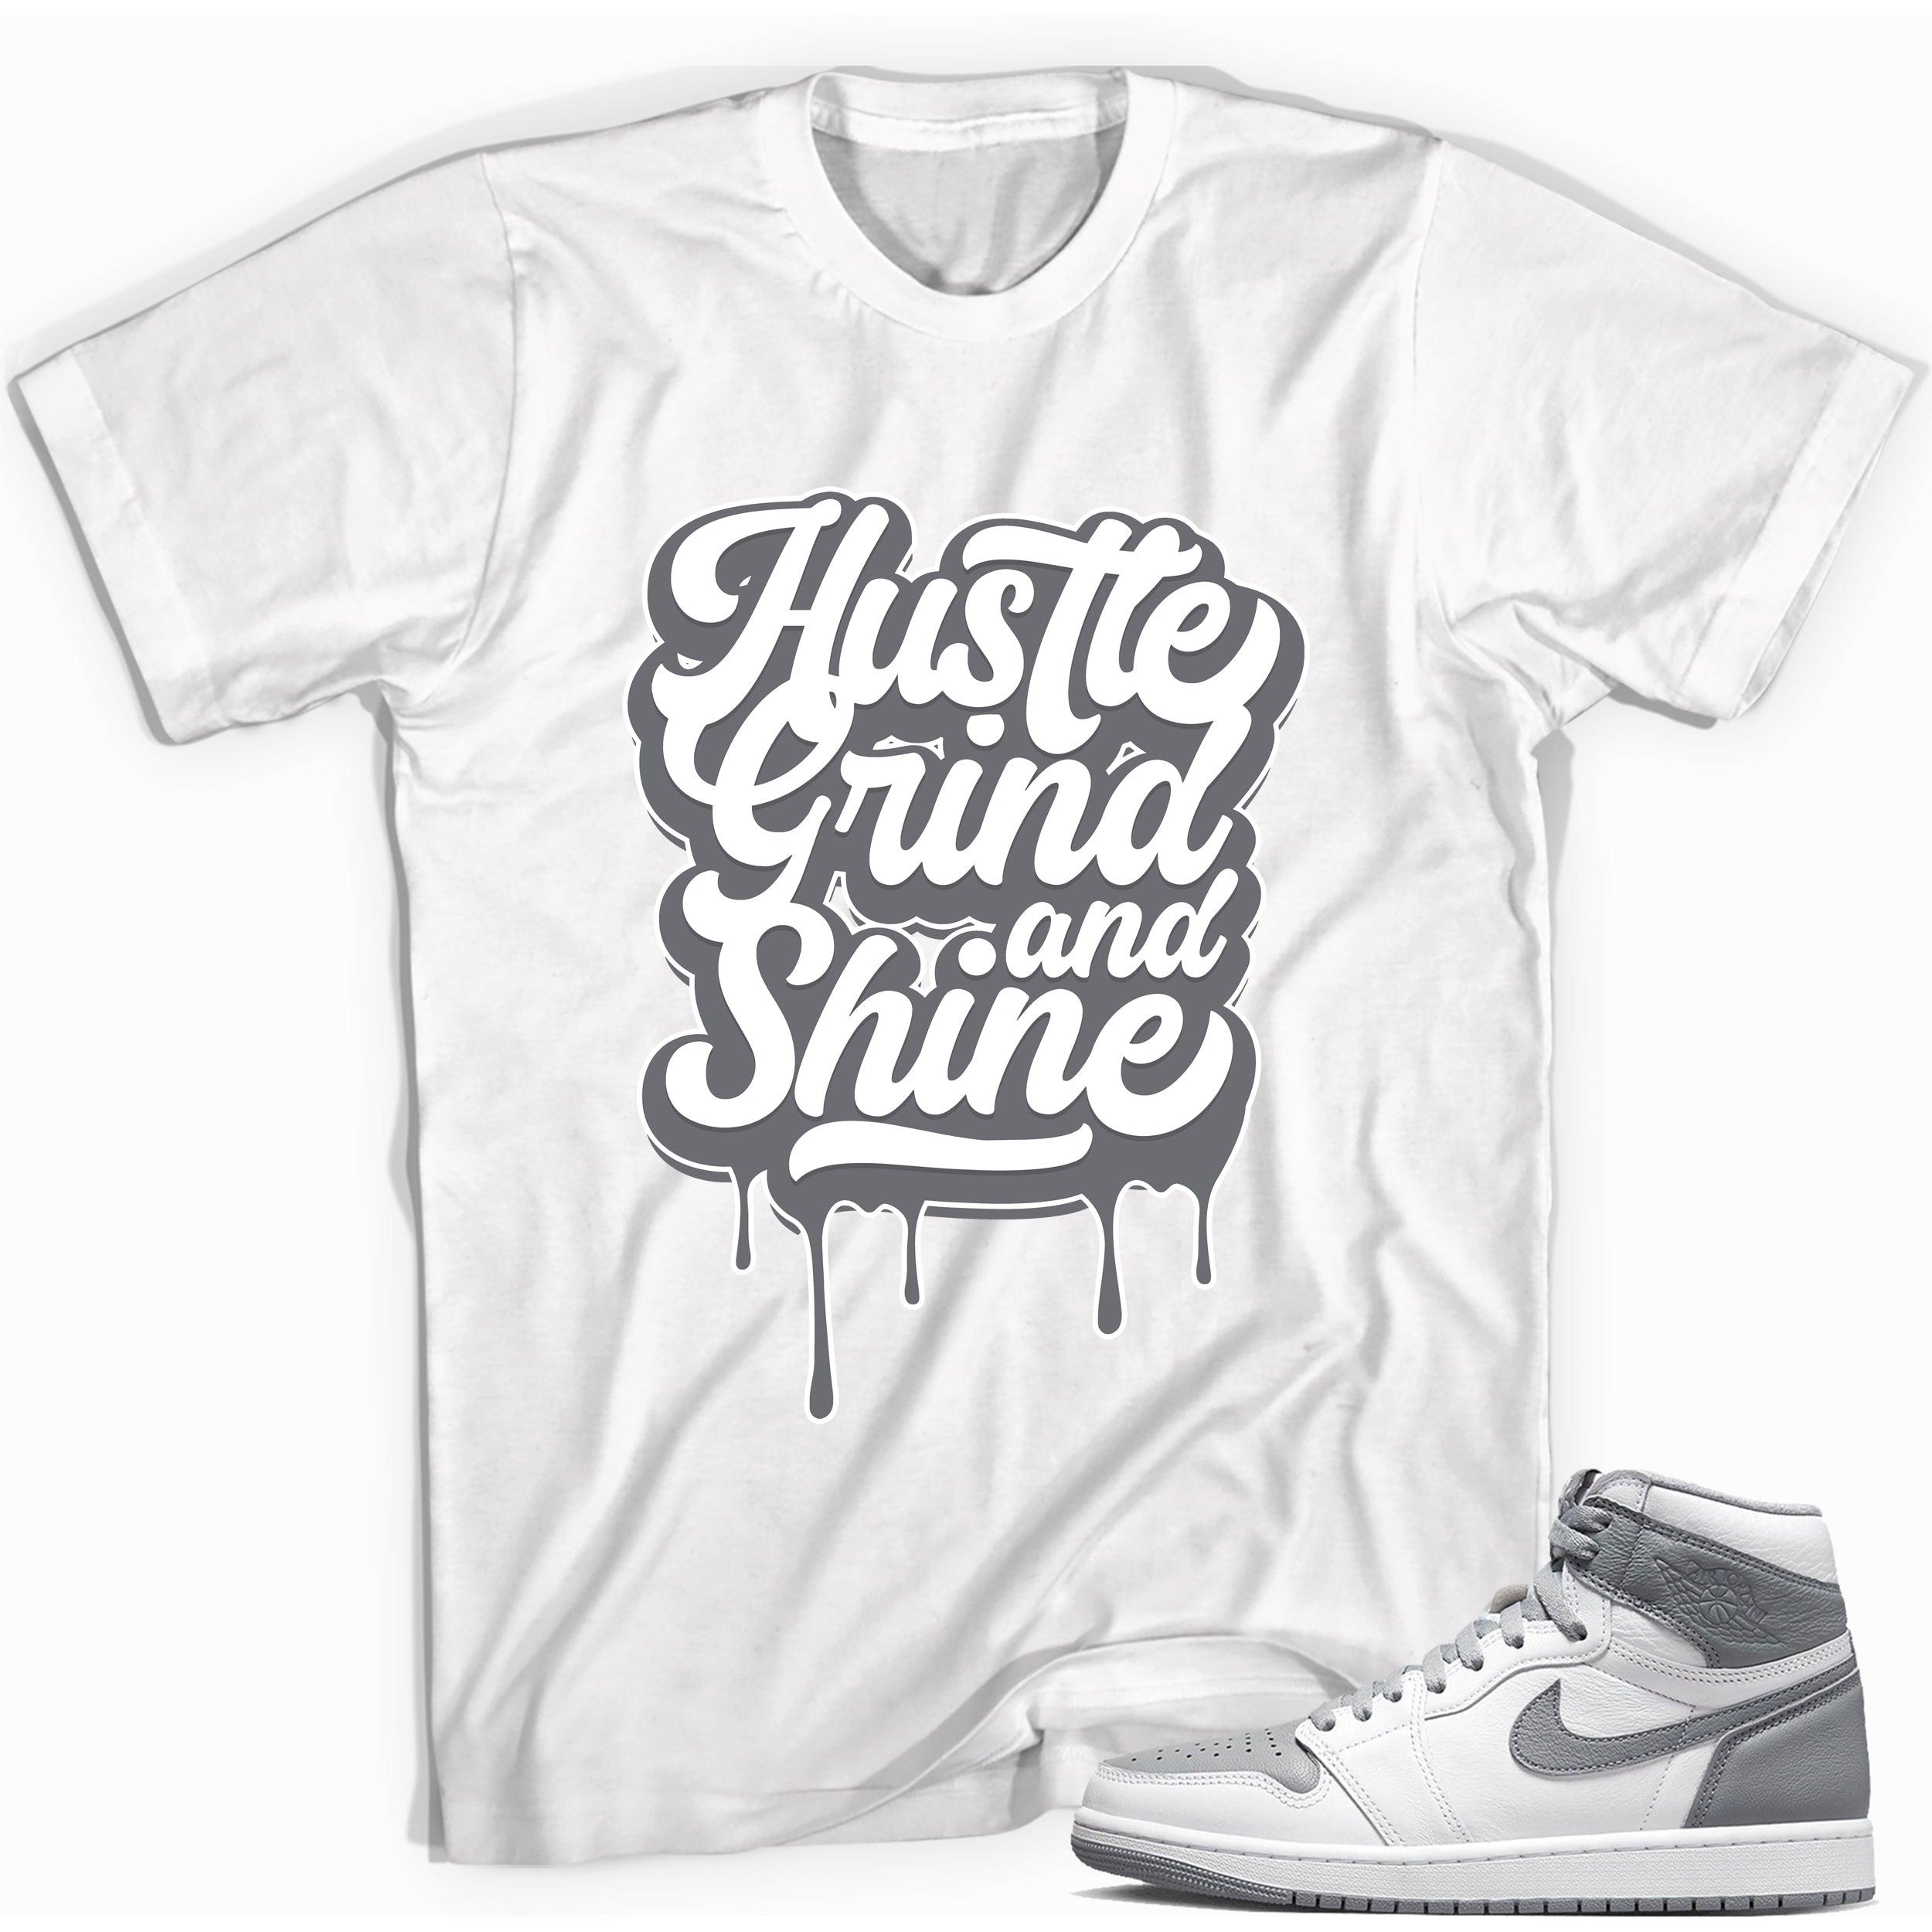 Hustle Grind and Shine Shirt for AJ 1s photo